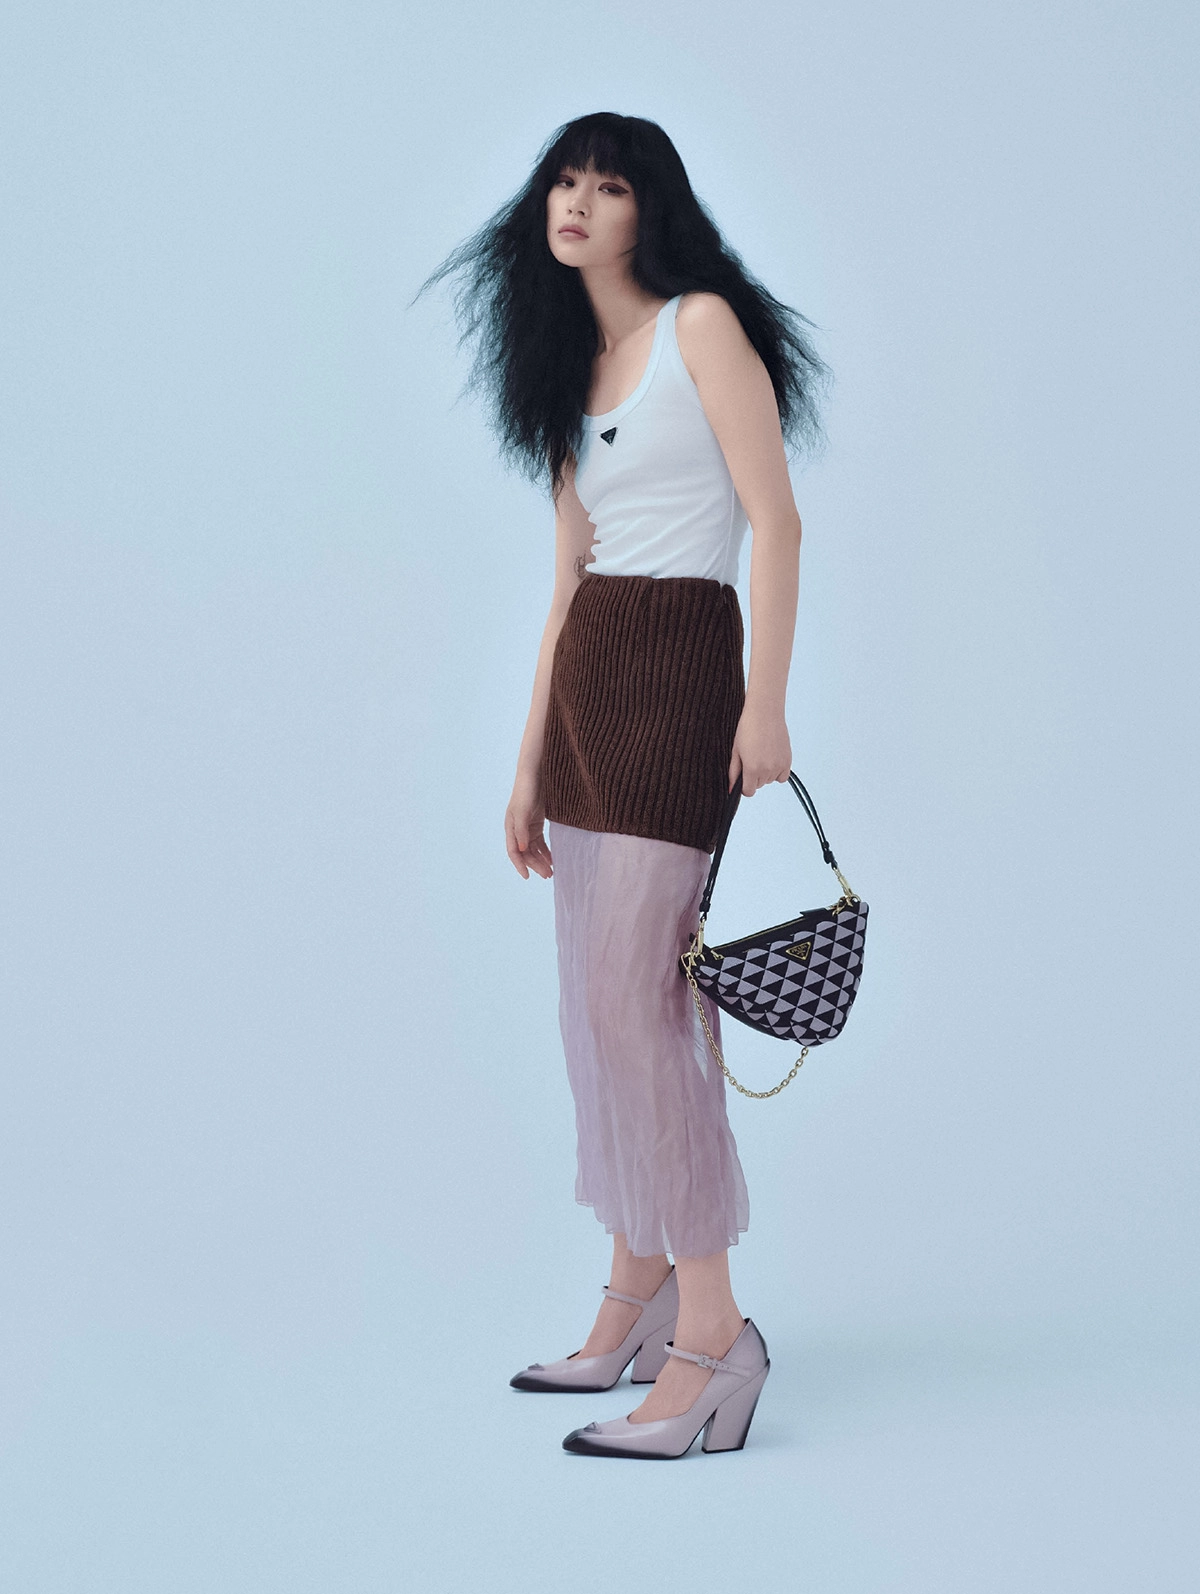 Minyoung by Masaya Tanaka for Harper’s Bazaar Japan September 2022